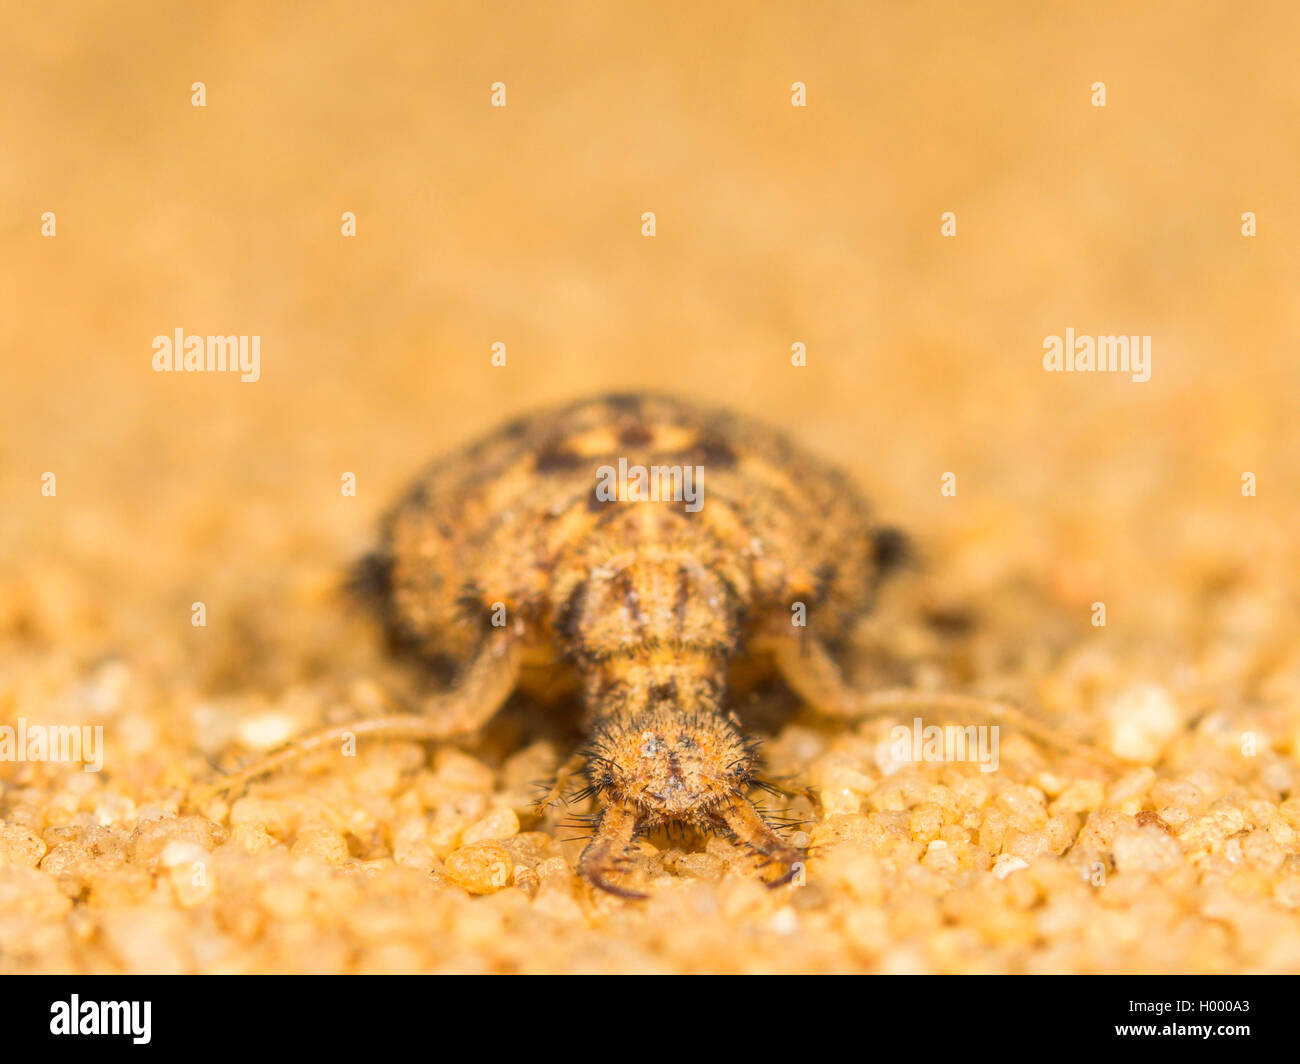 European antlion (Euroleon nostras), The mature larva digs itself into the sandy soil, Germany Stock Photo